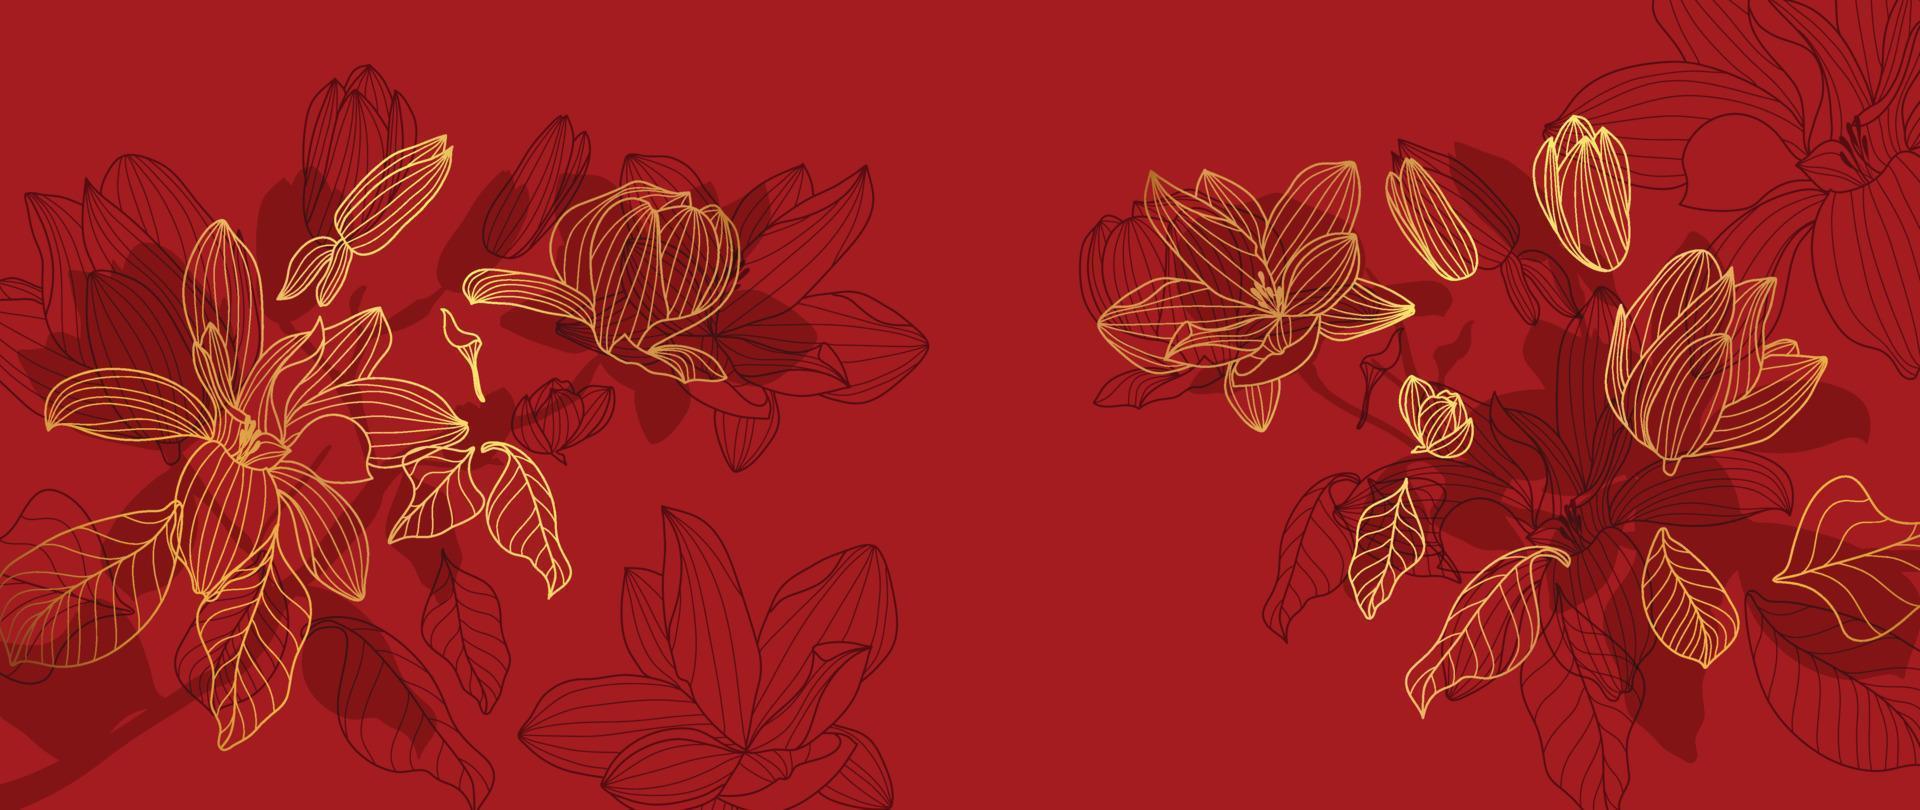 Luxury oriental flower background vector. Elegant magnolia flowers and leaves golden line art pattern texture on red background. Design illustration for decoration, wallpaper, poster, banner, card. vector